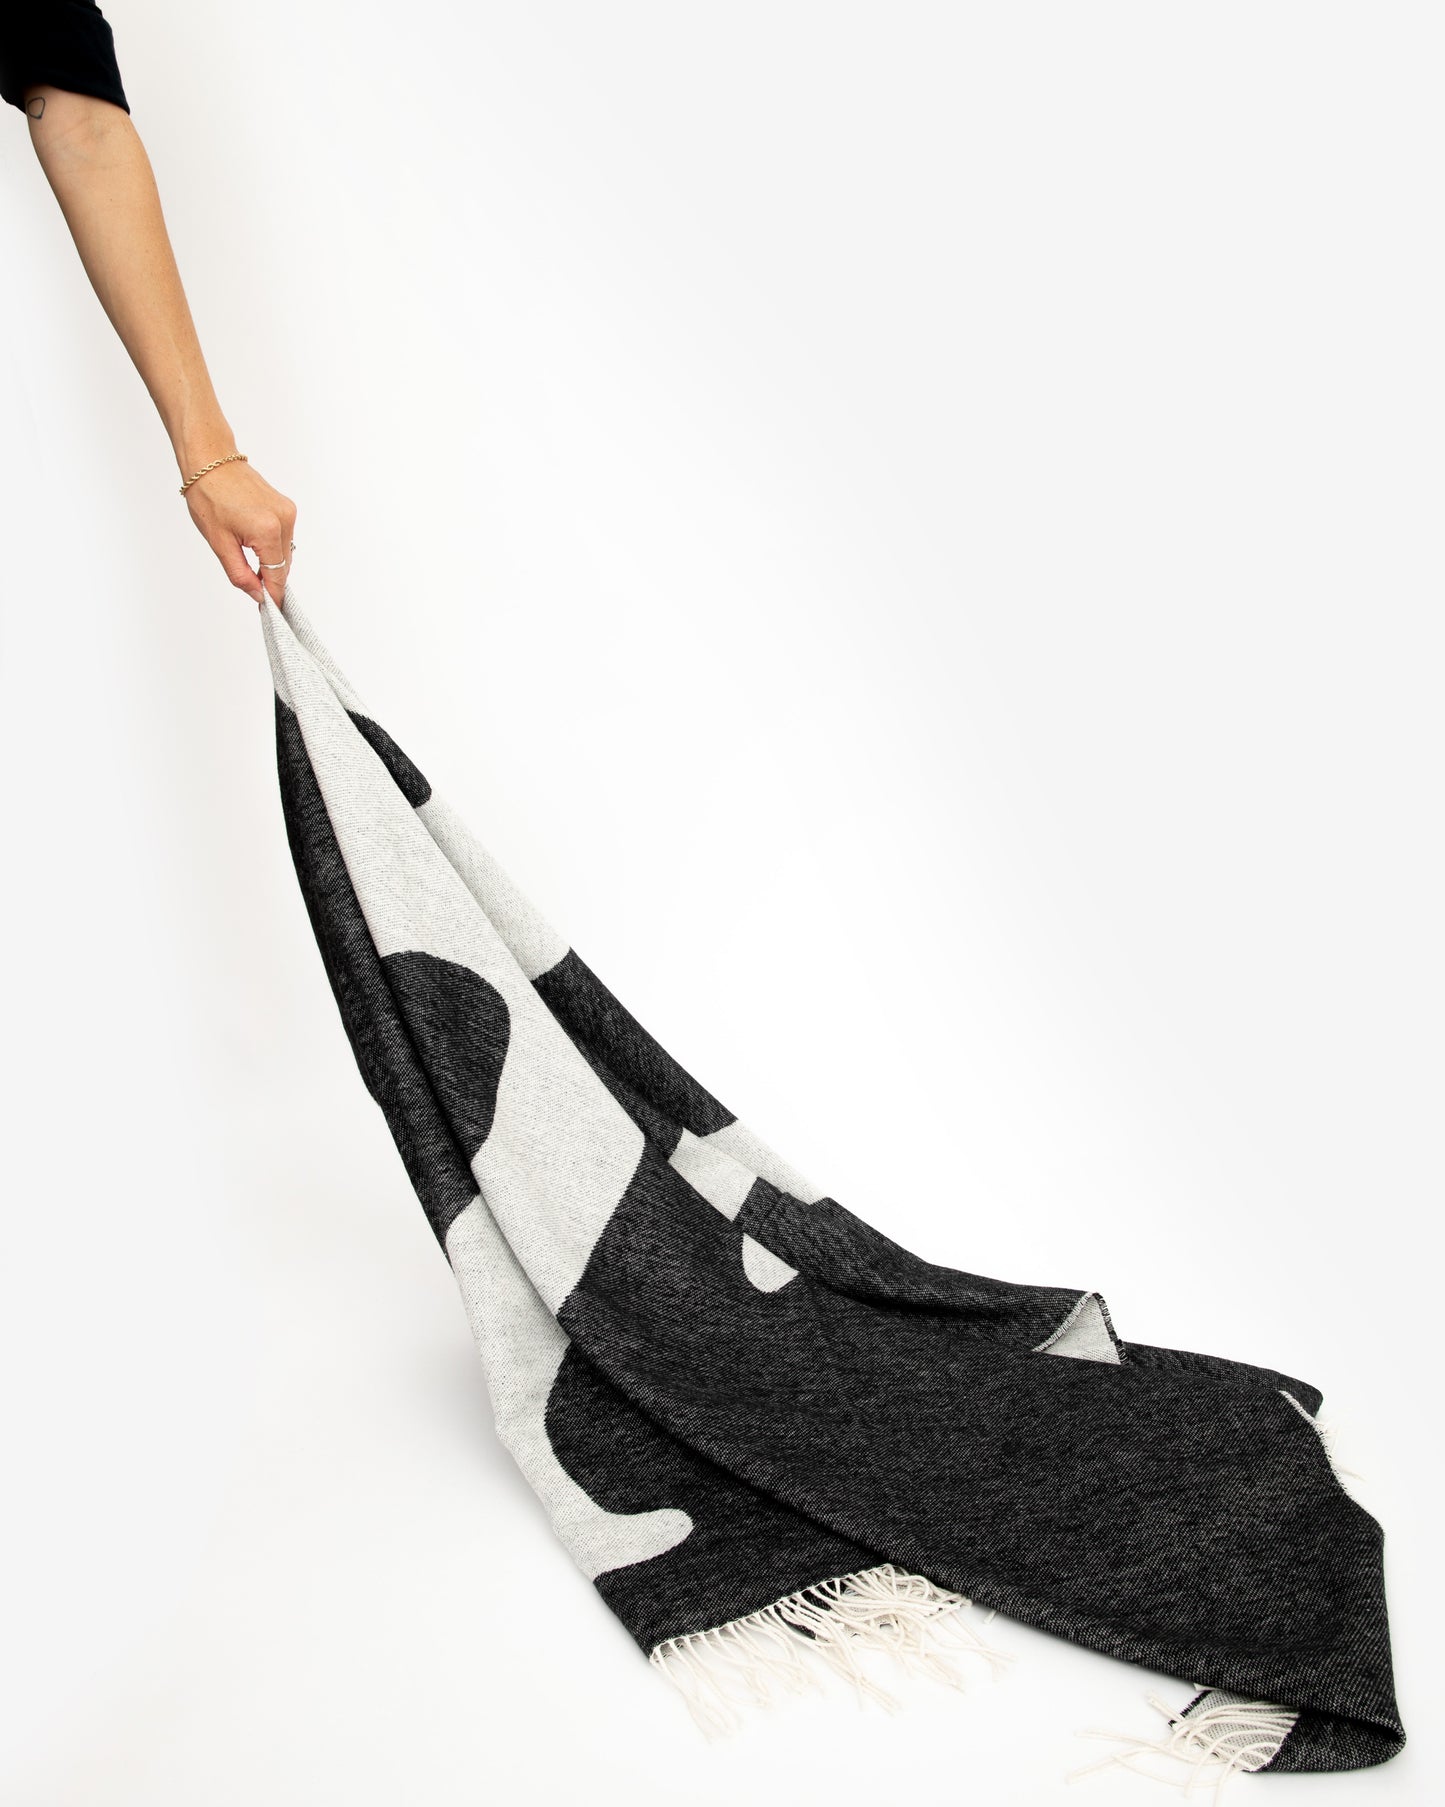 Cockatoo Black blanket